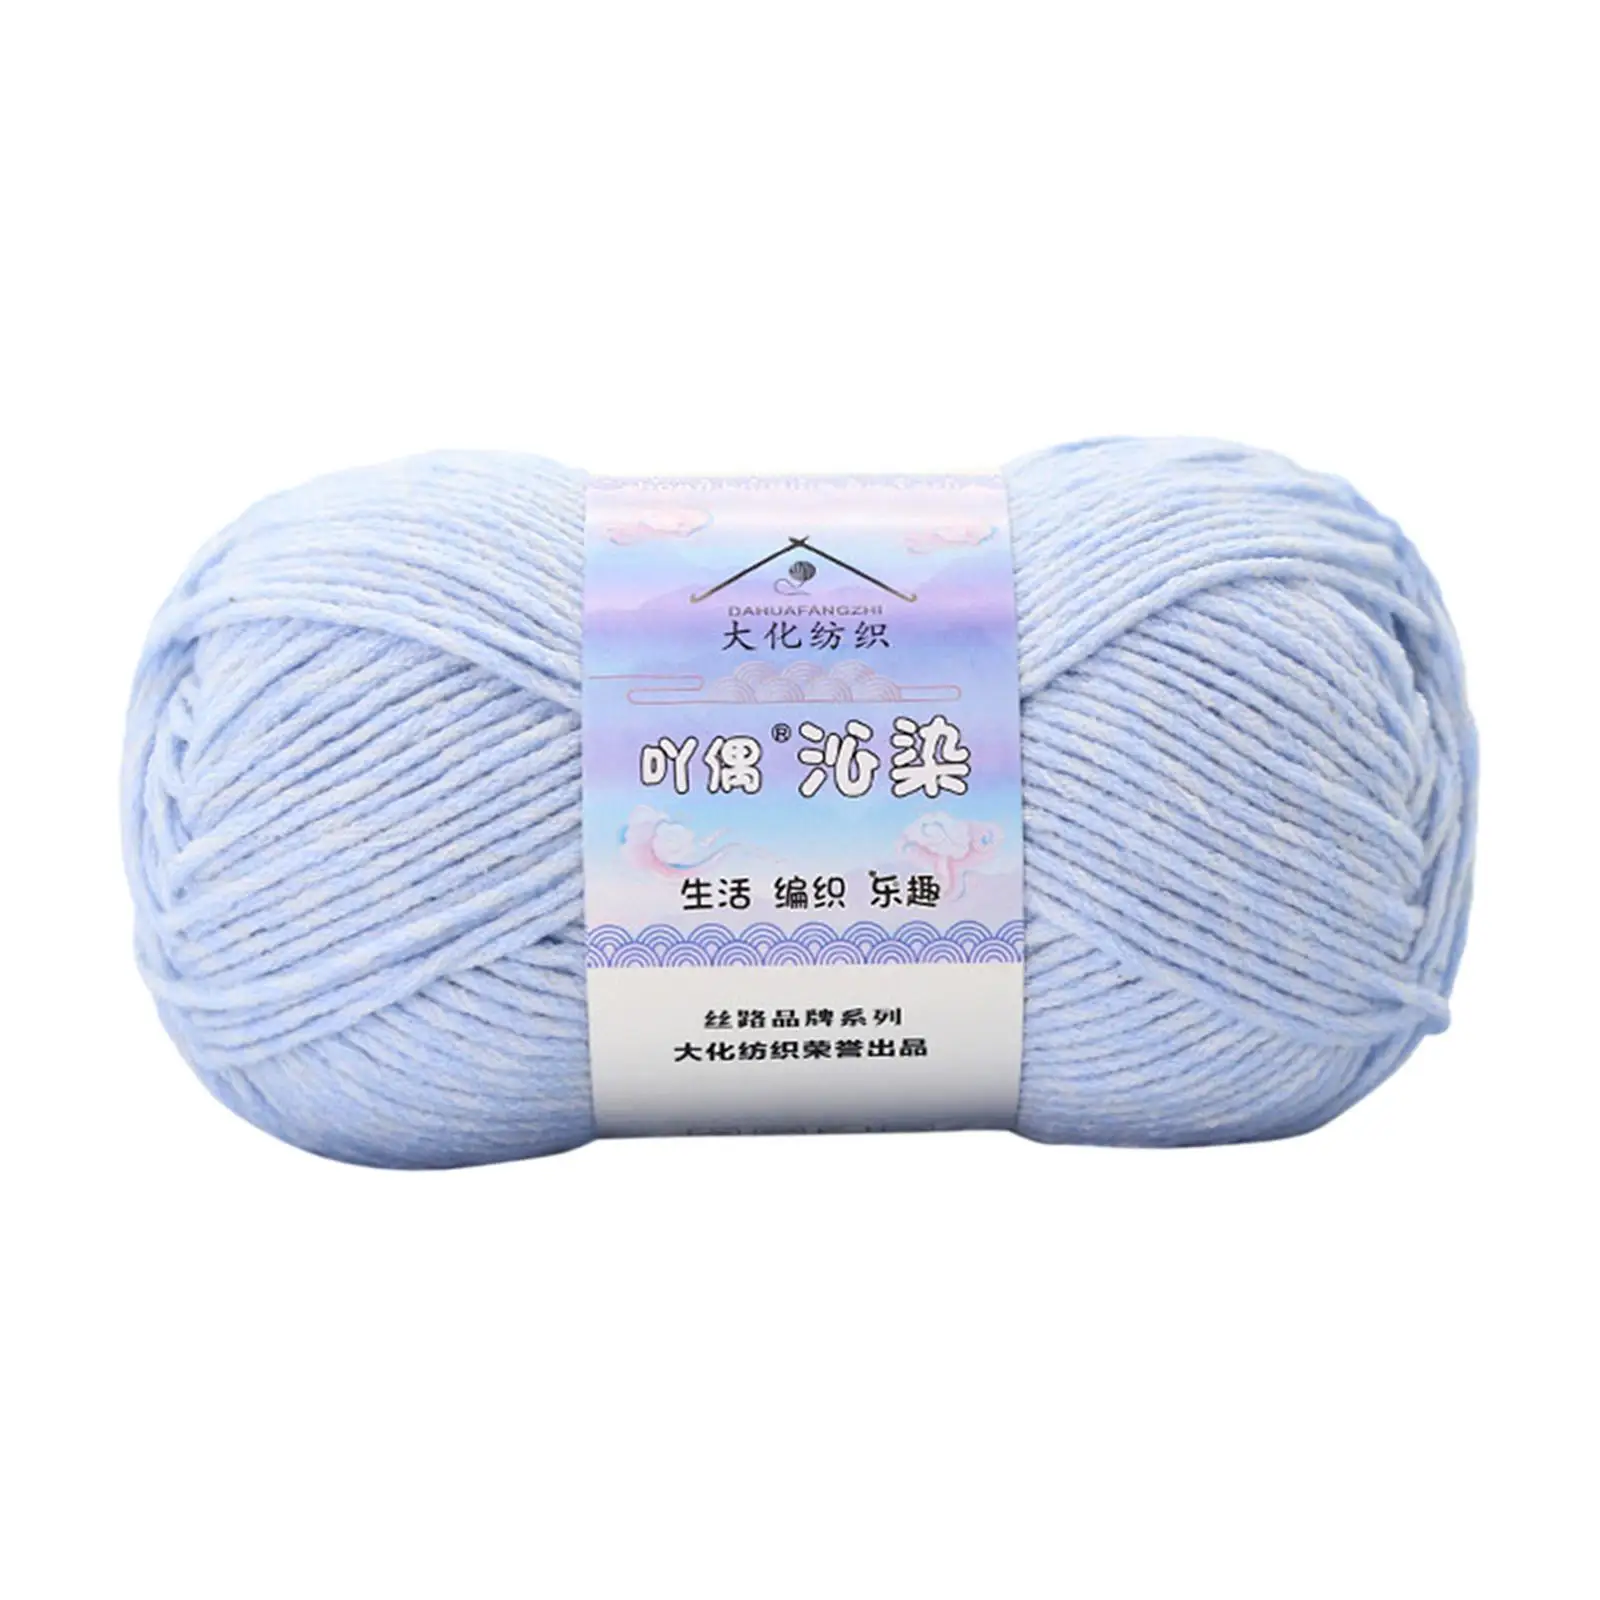 Knitting Yarn Beginner 175M/574ft Durable Accessories Hand Knitting Crochet Thread for Handbags Hats Knitting Gloves Needlework